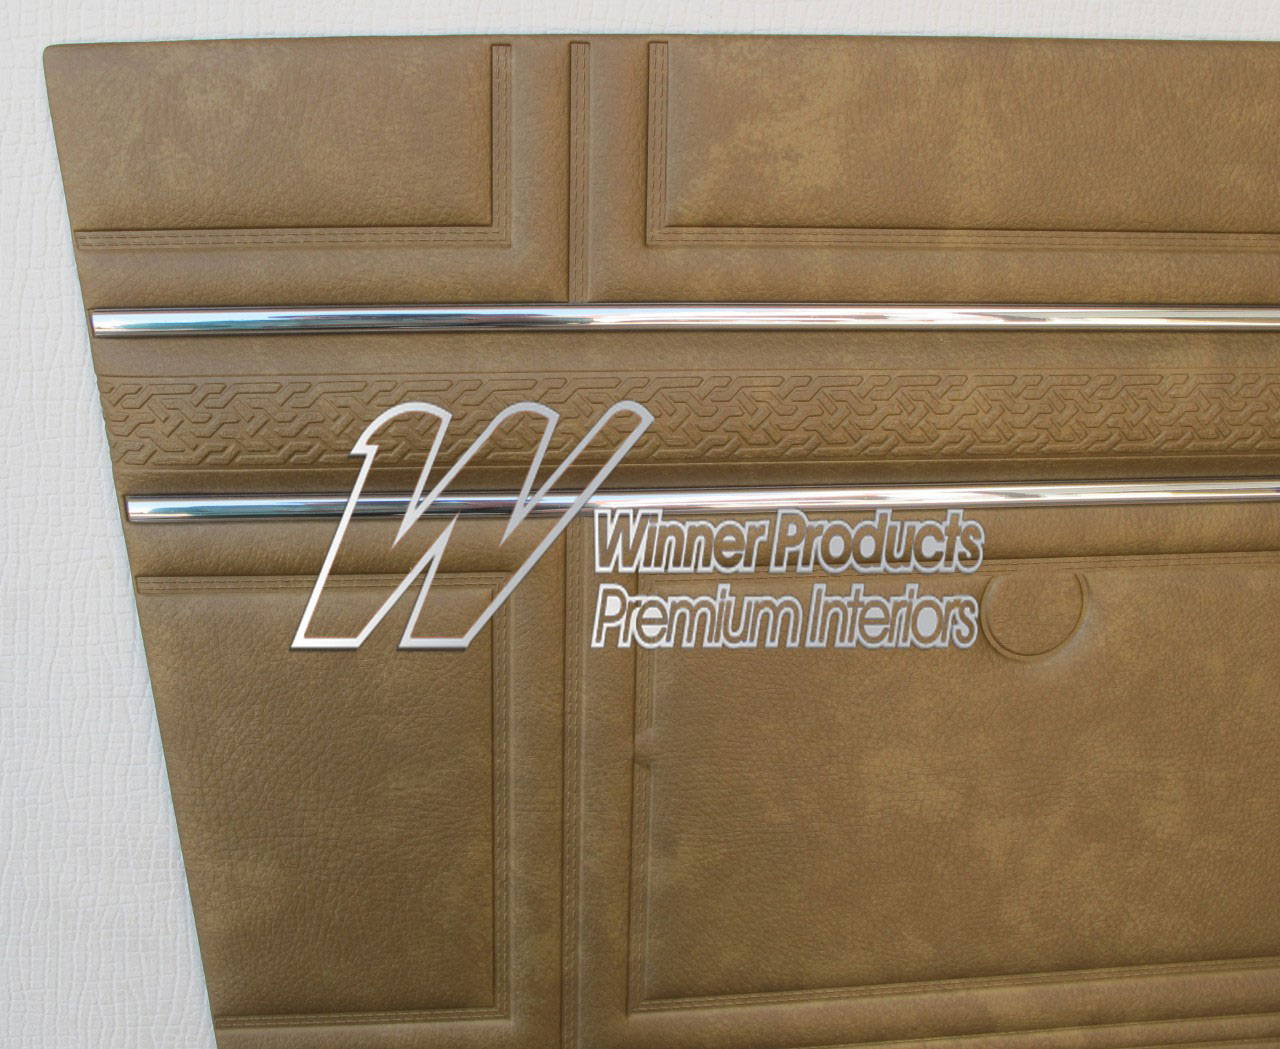 Holden Kingswood HT Kingswood Sedan 11E Antique Gold Door Trims (Image 3 of 3)